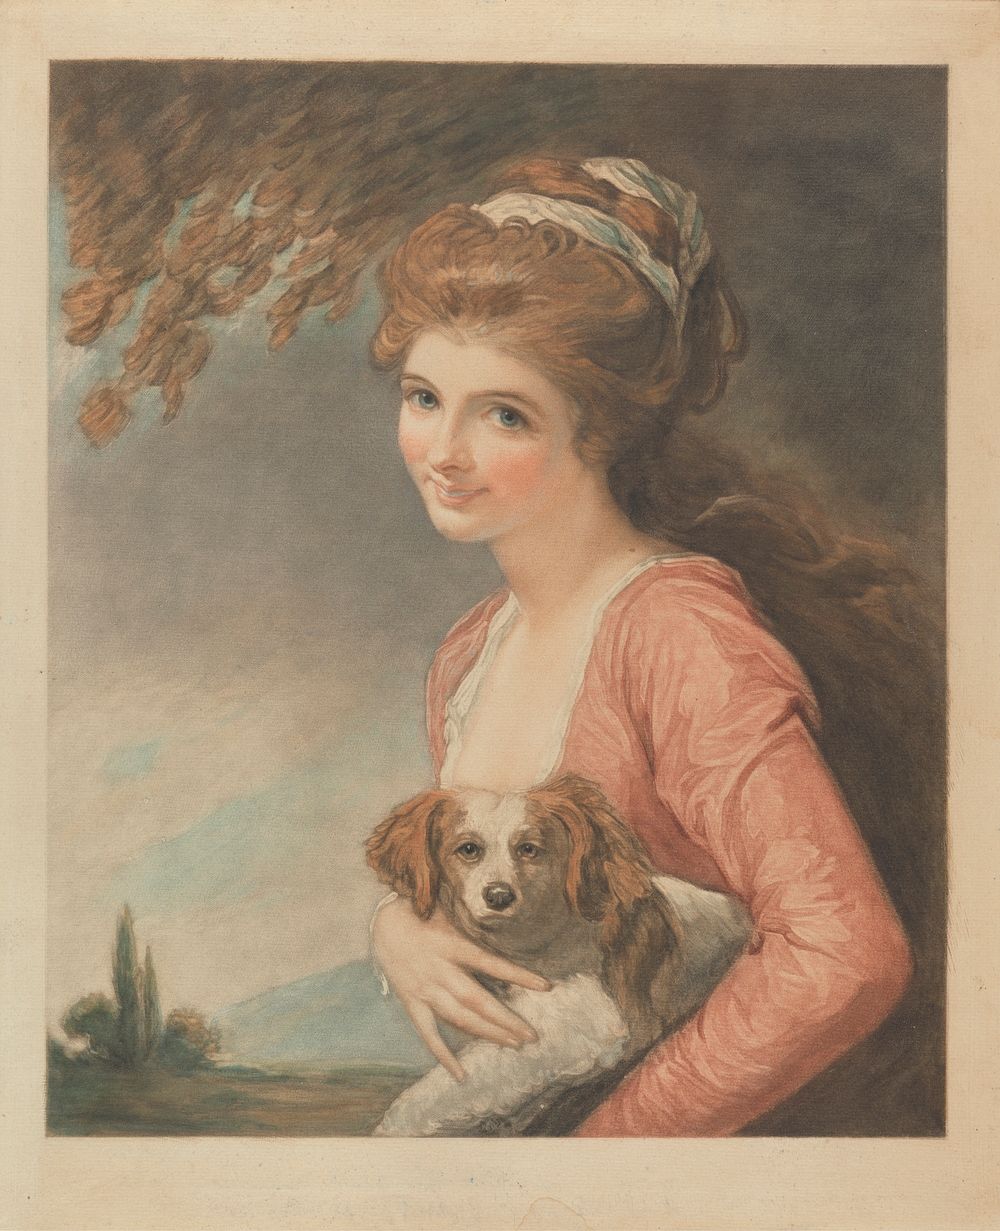 Lady Hamilton with a dog